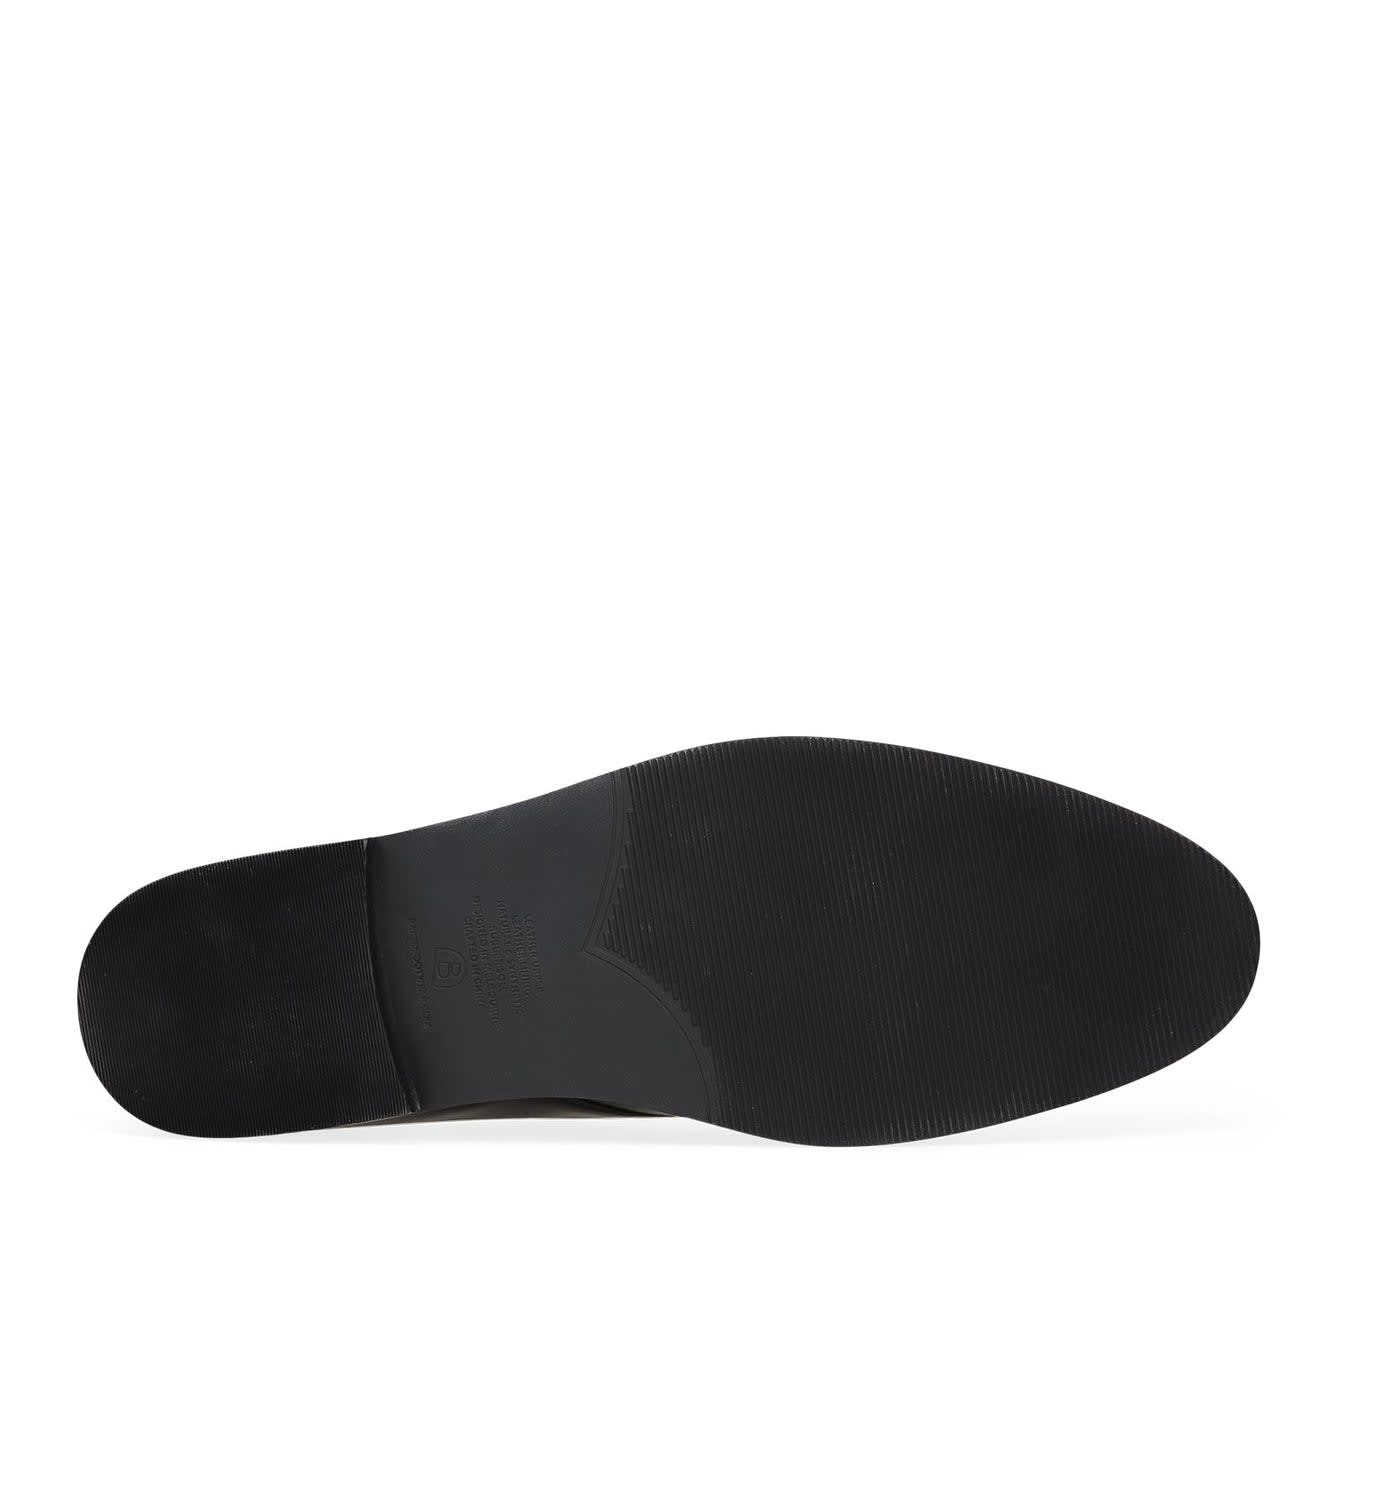 Coronet Black Patent Leather Monks | Bared Footwear